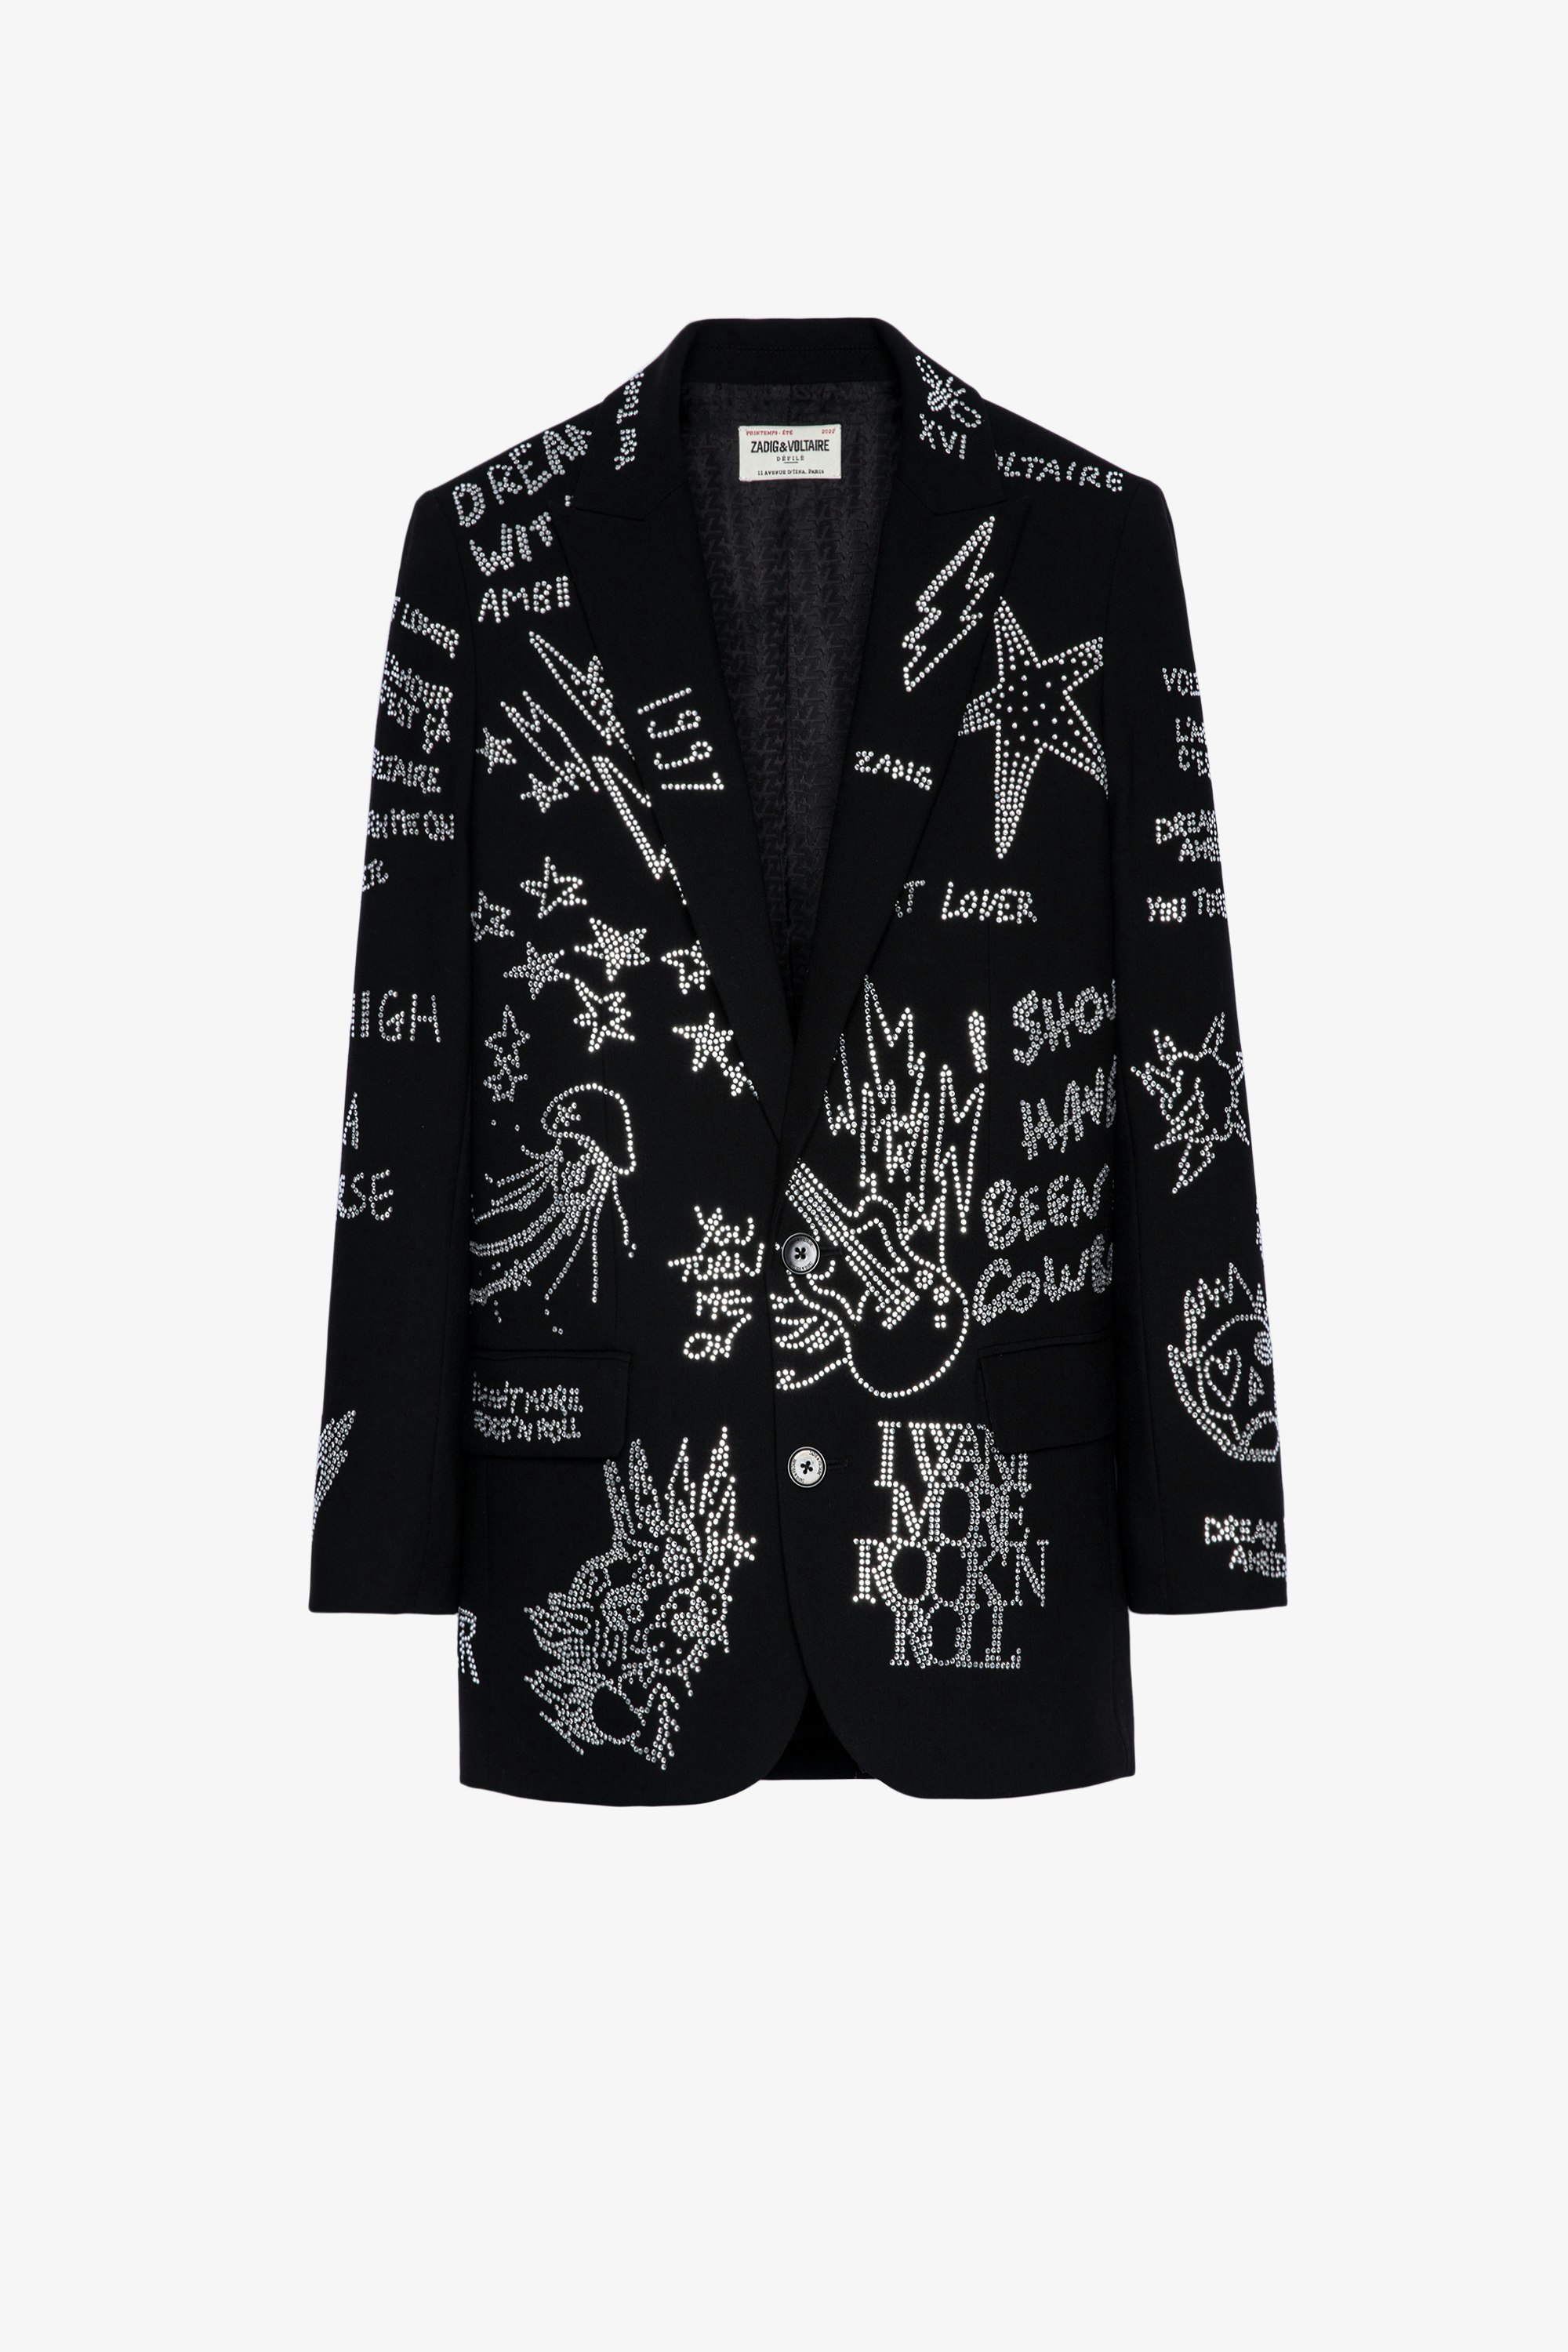 Viva ジャケット Women's black tailored jacket with rhinestone pattern